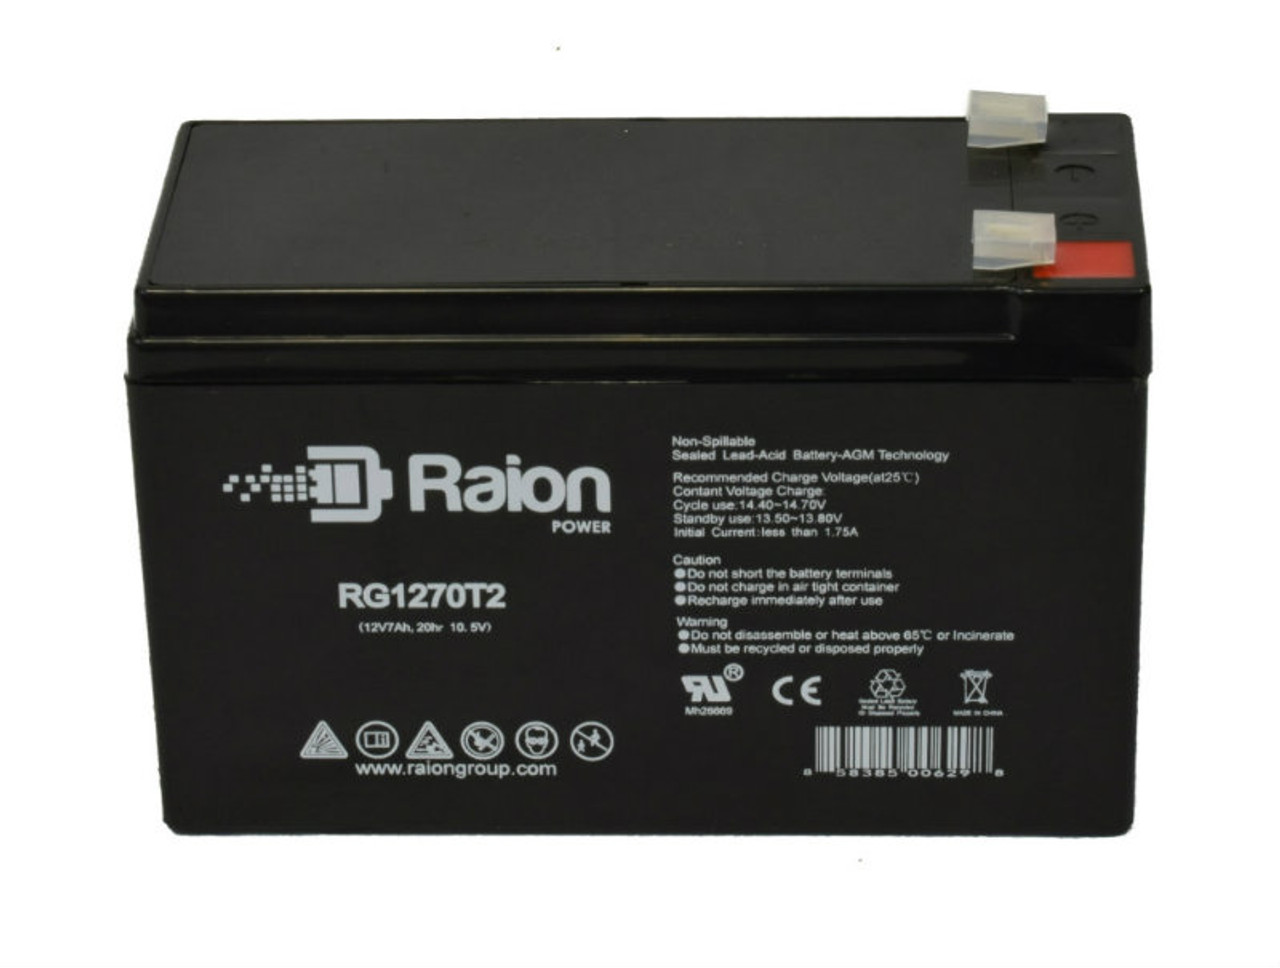 Raion Power RG1270T2 12V 7Ah Lead Acid Battery for Mule PM1270